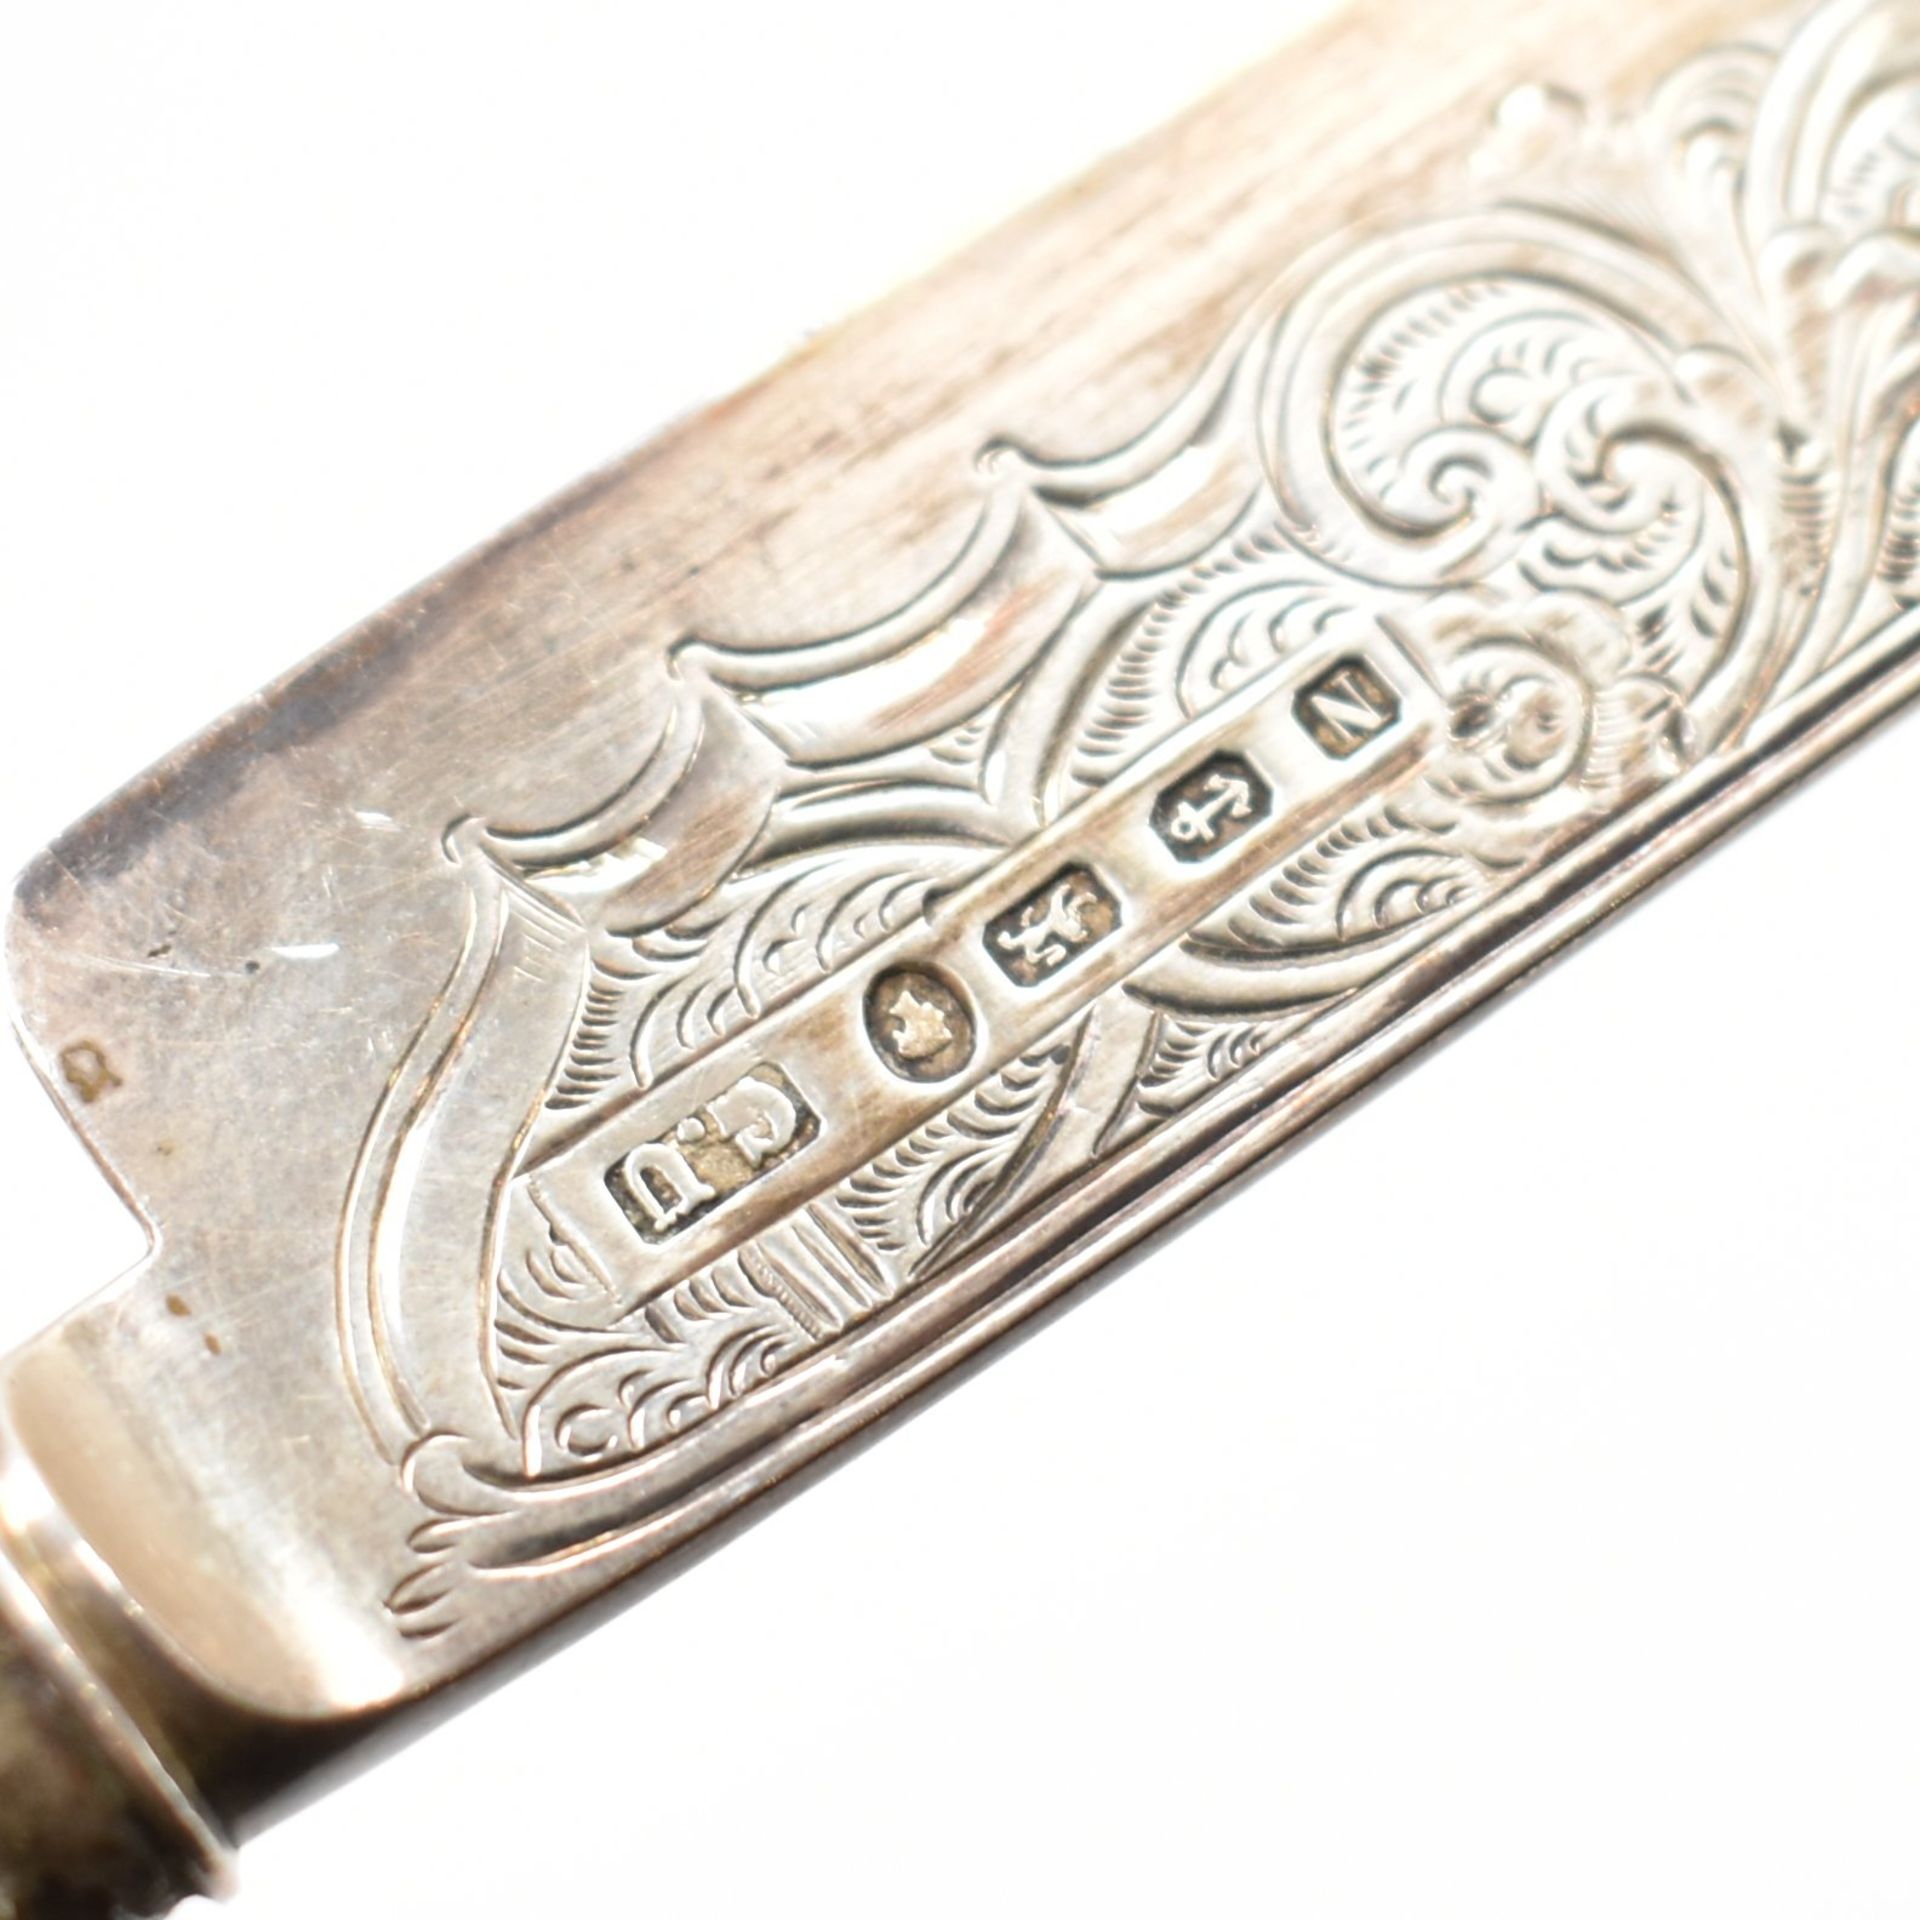 SILVER HALLMARKED VICTORIAN KNIFE & GEORGIAN SPOON - Image 6 of 6